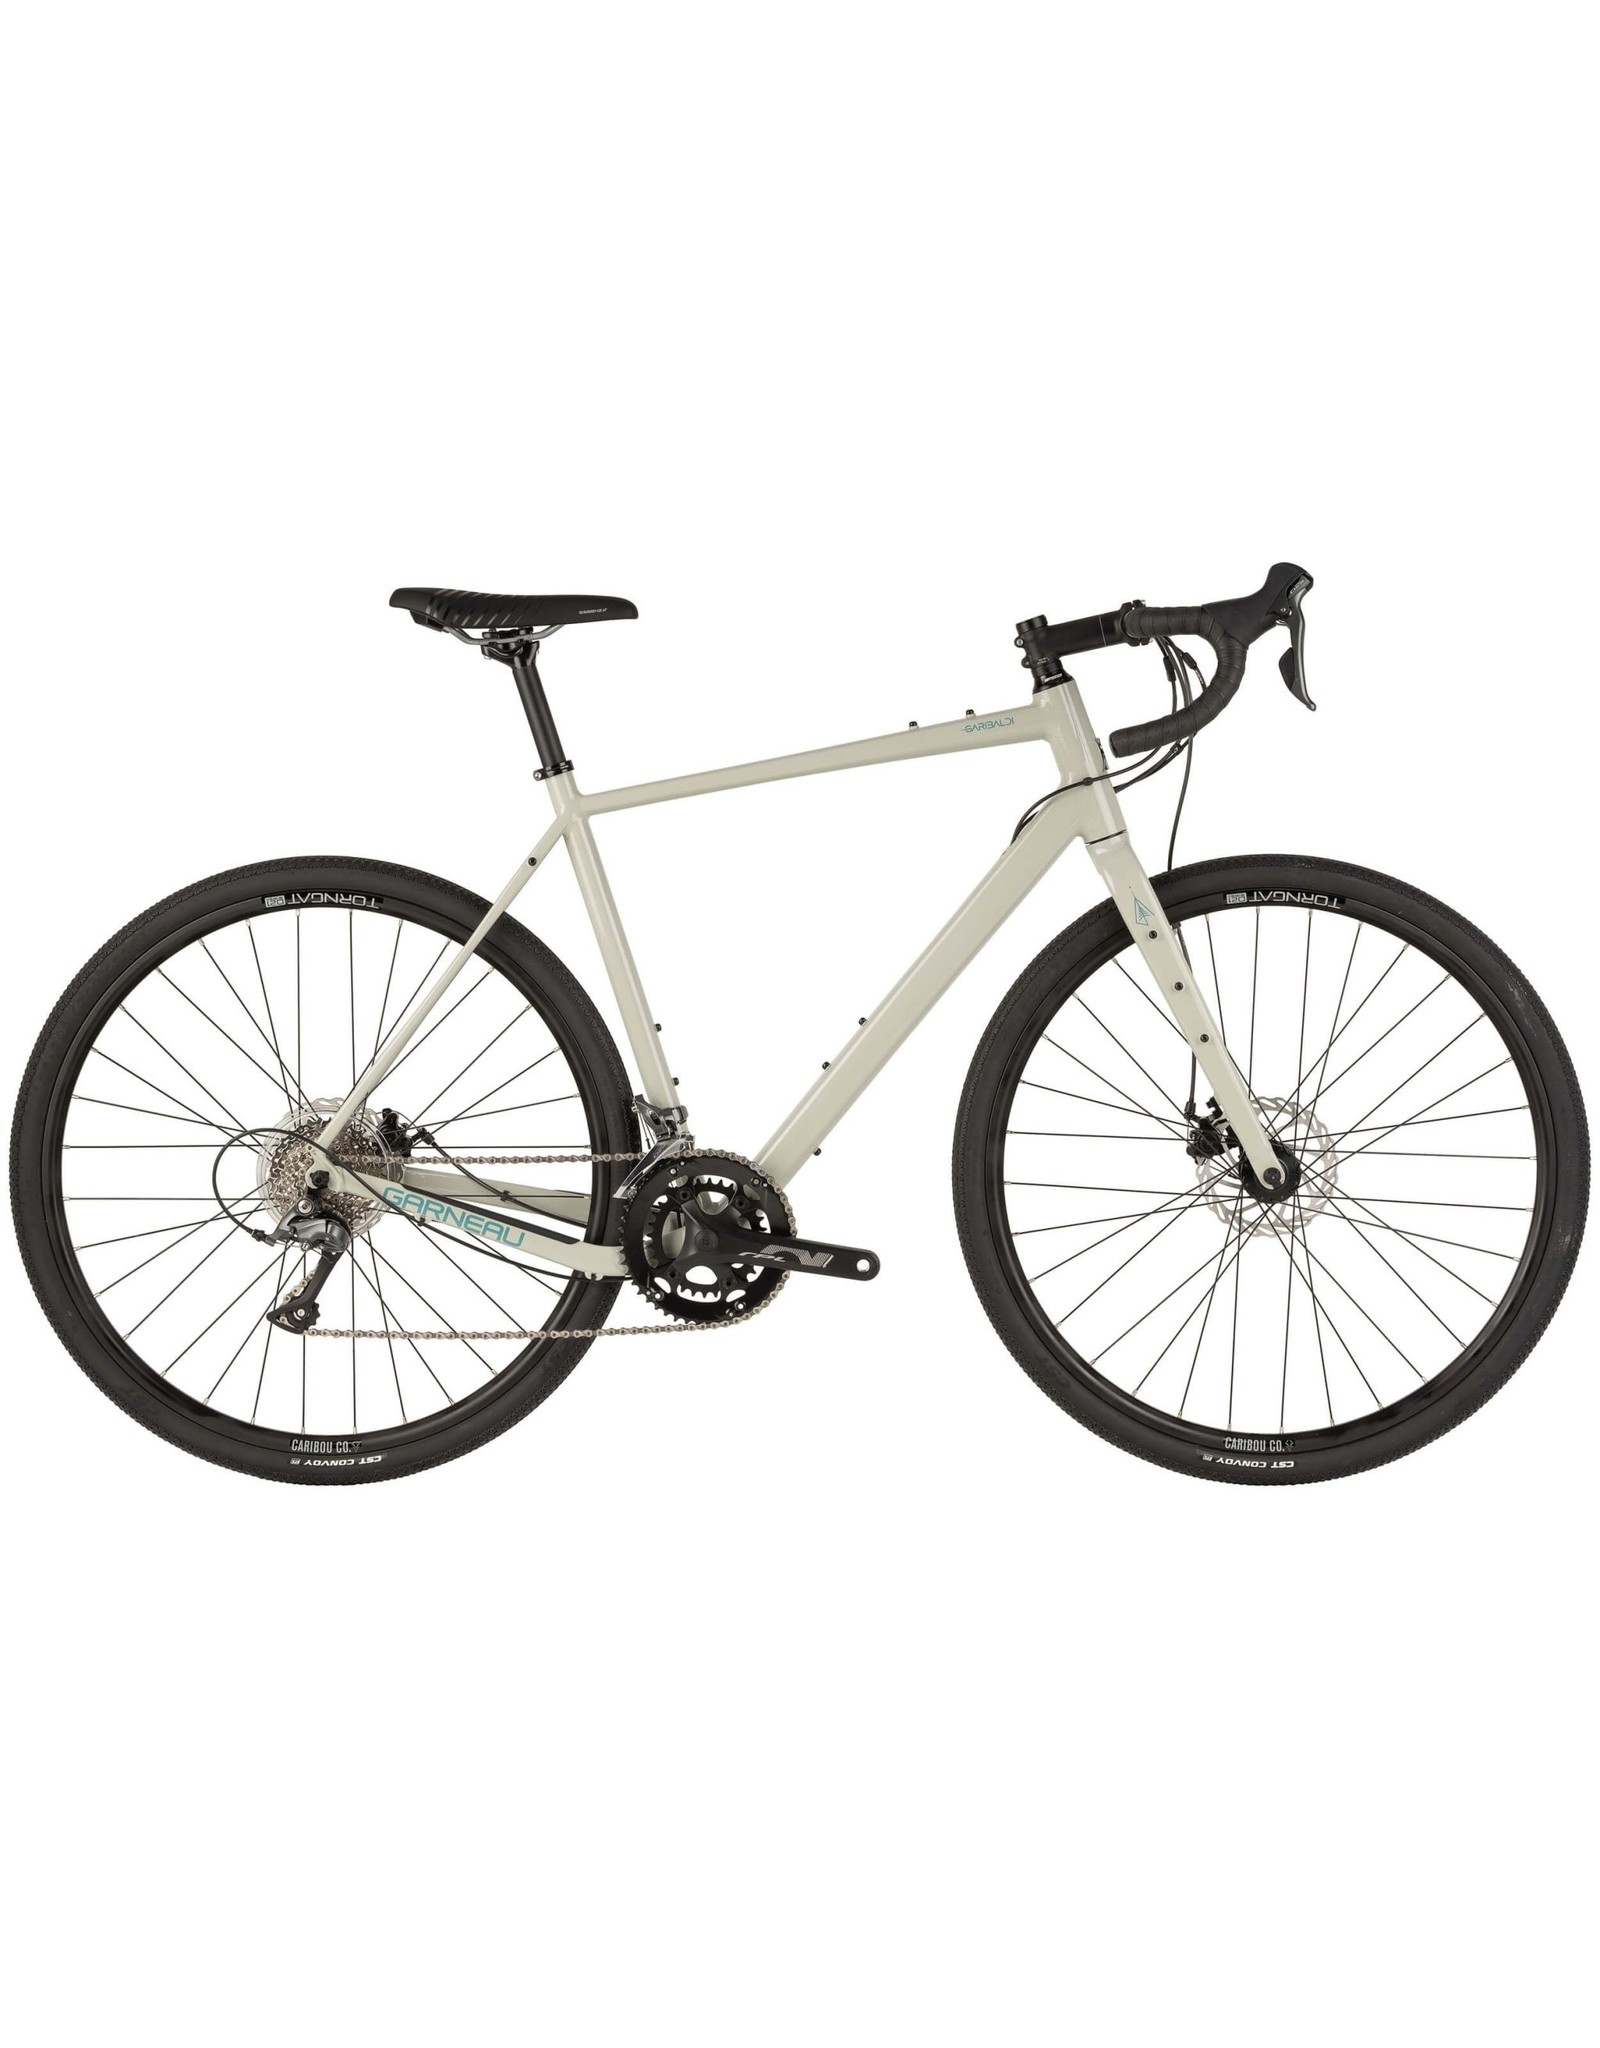 Garneau Gravel Bike - Garibaldi G4 (2022)